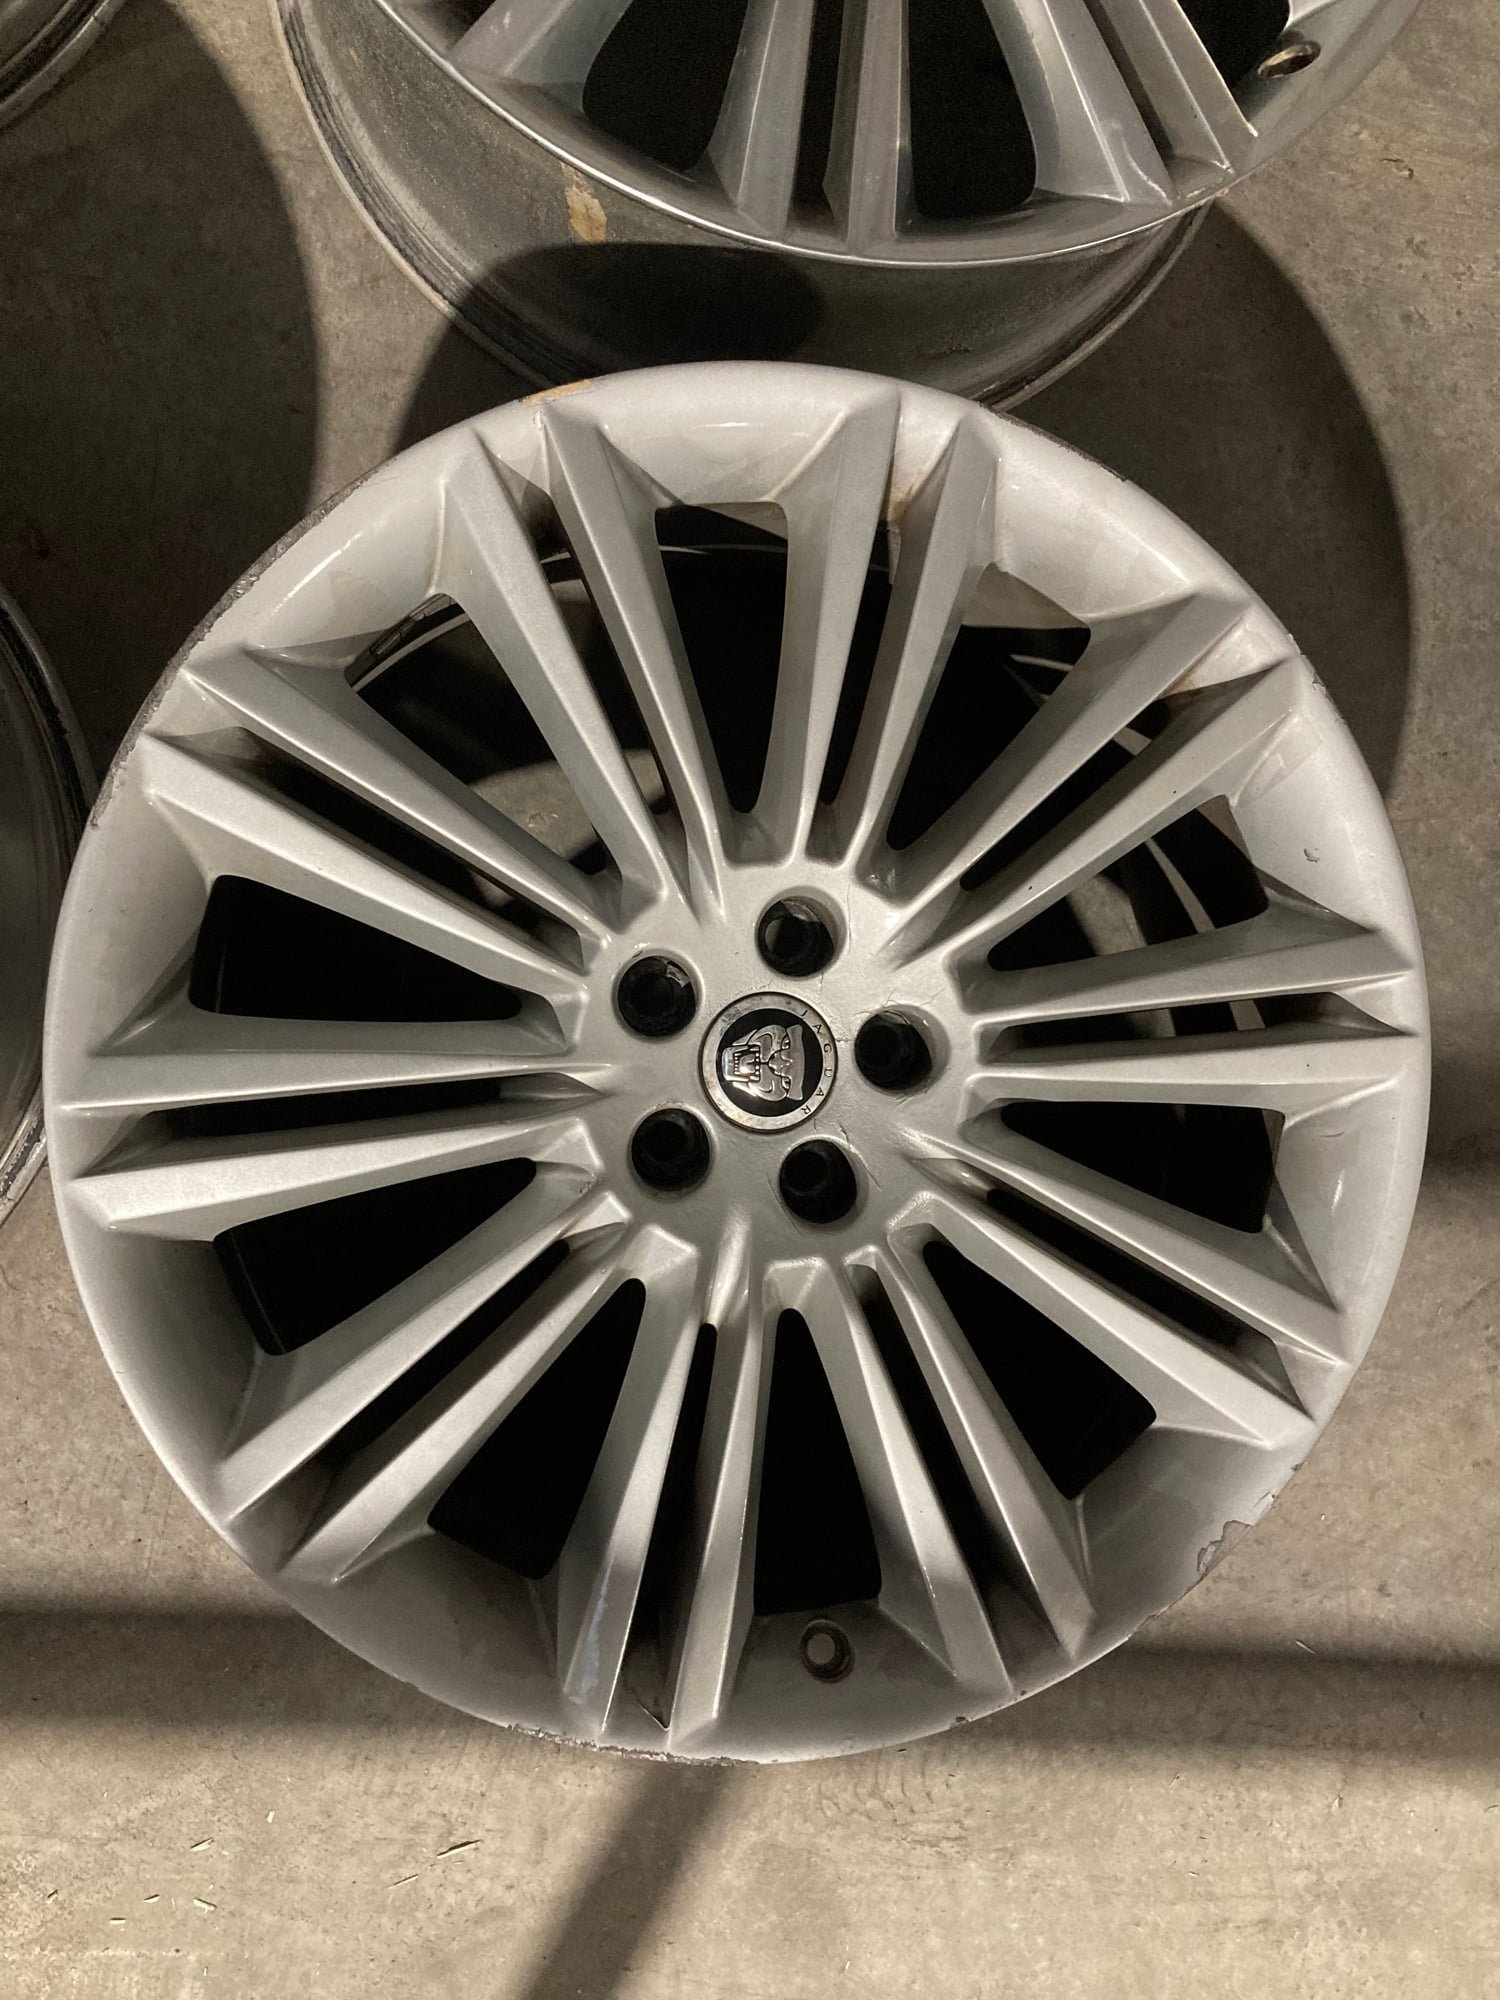 Wheels and Tires/Axles - OEM XJ 20” Kasuga Wheels - Used - 2012 Jaguar XJ - Austin, TX 78719, United States